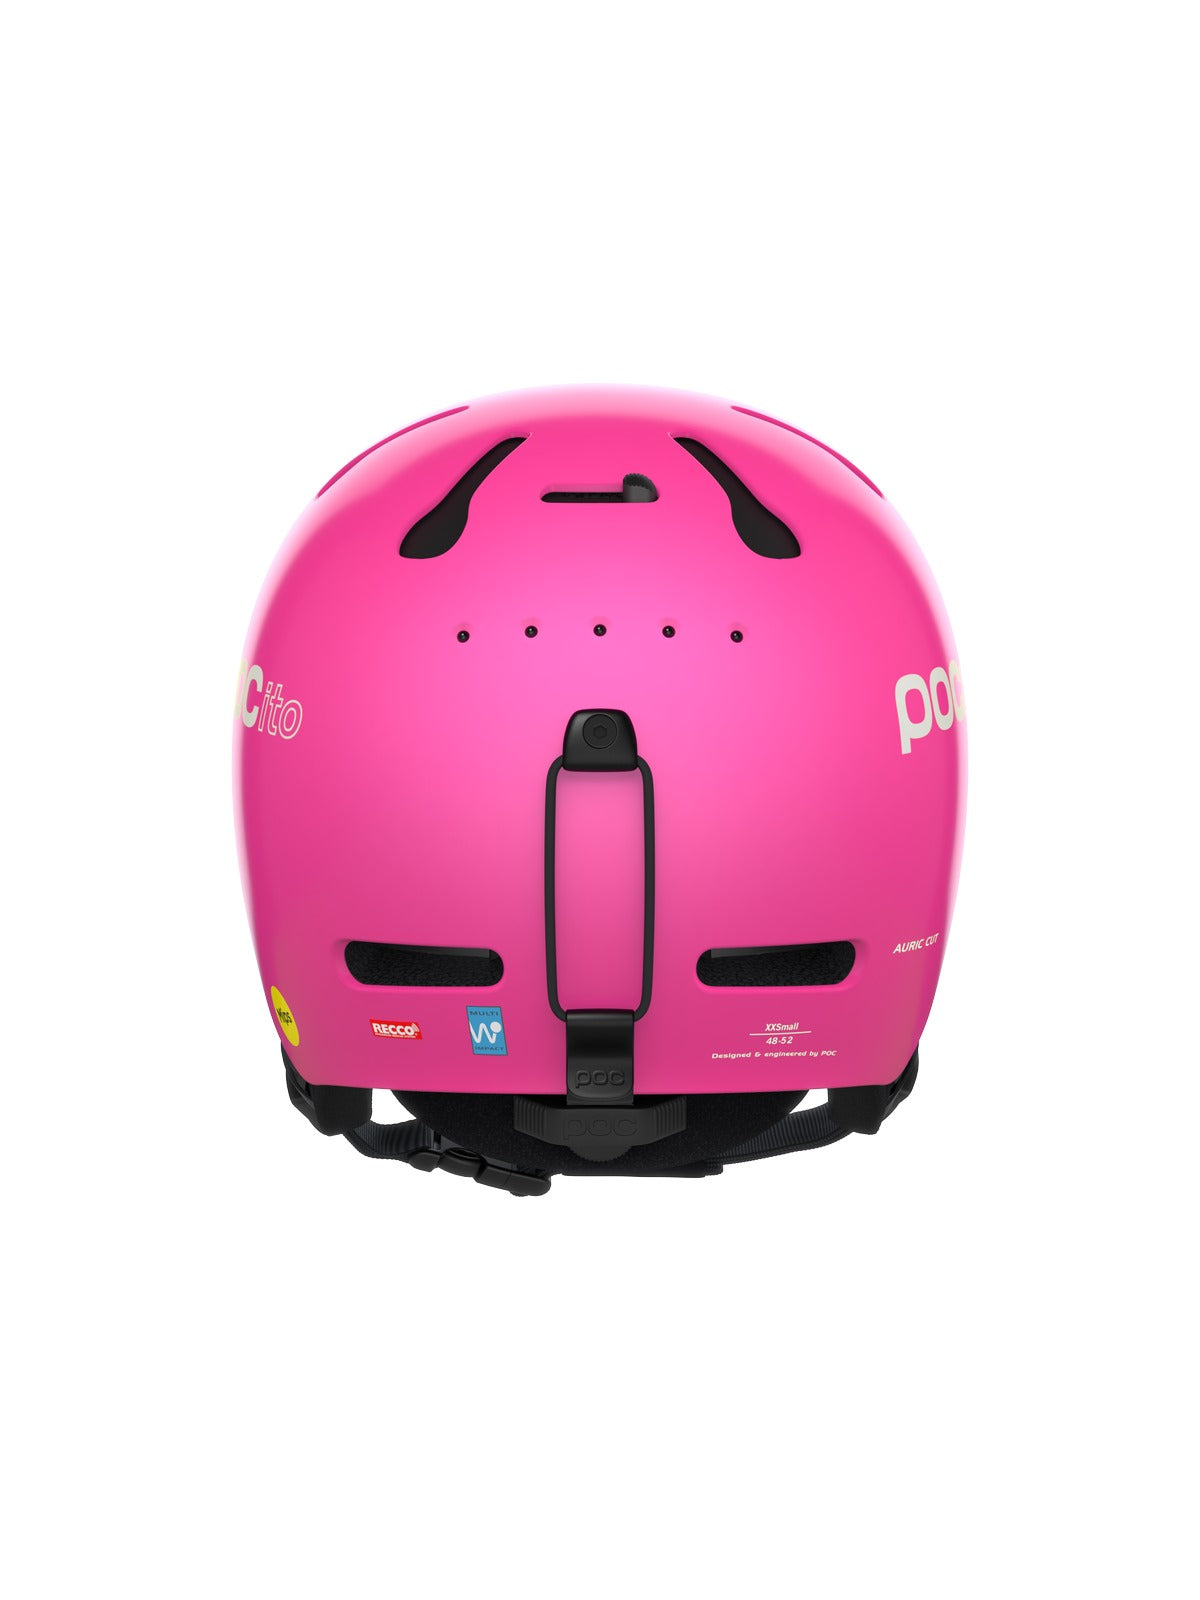 Kask narciarski POC POCito Auric Cut MIPS - Fluo. Pink